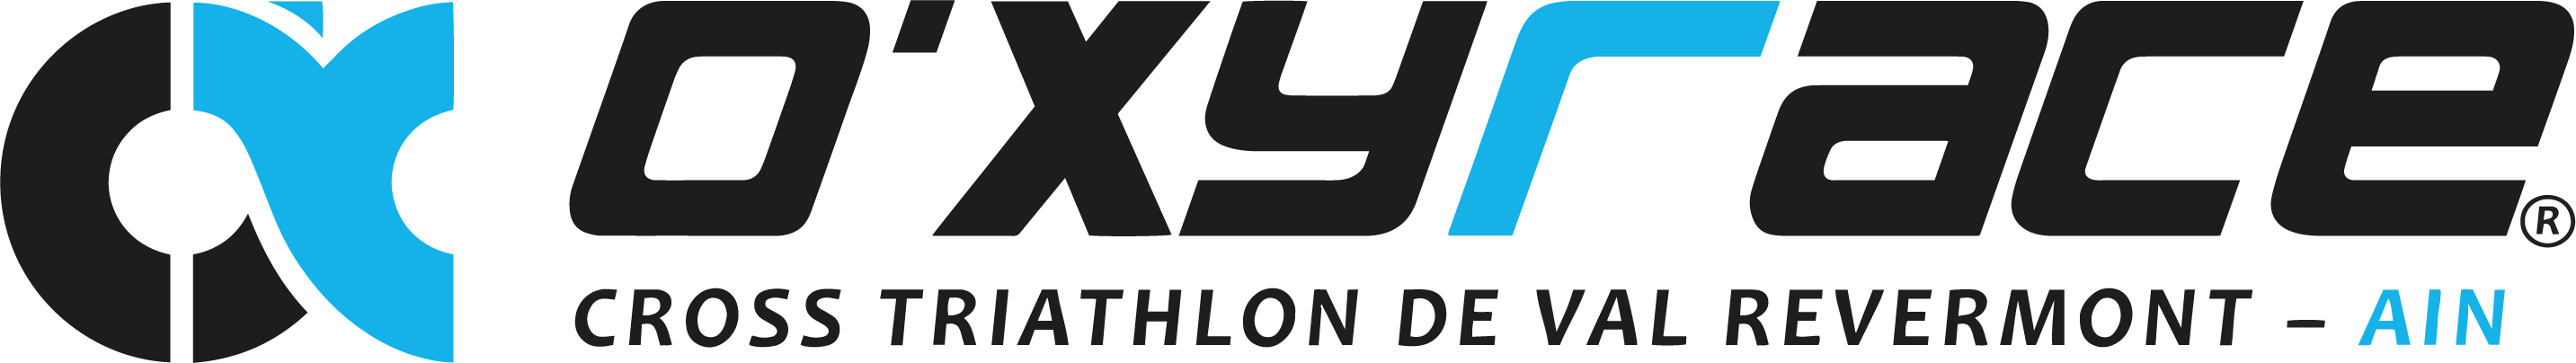 Logo O'xyrace Cross Triathlon de Val Revermont - Ain